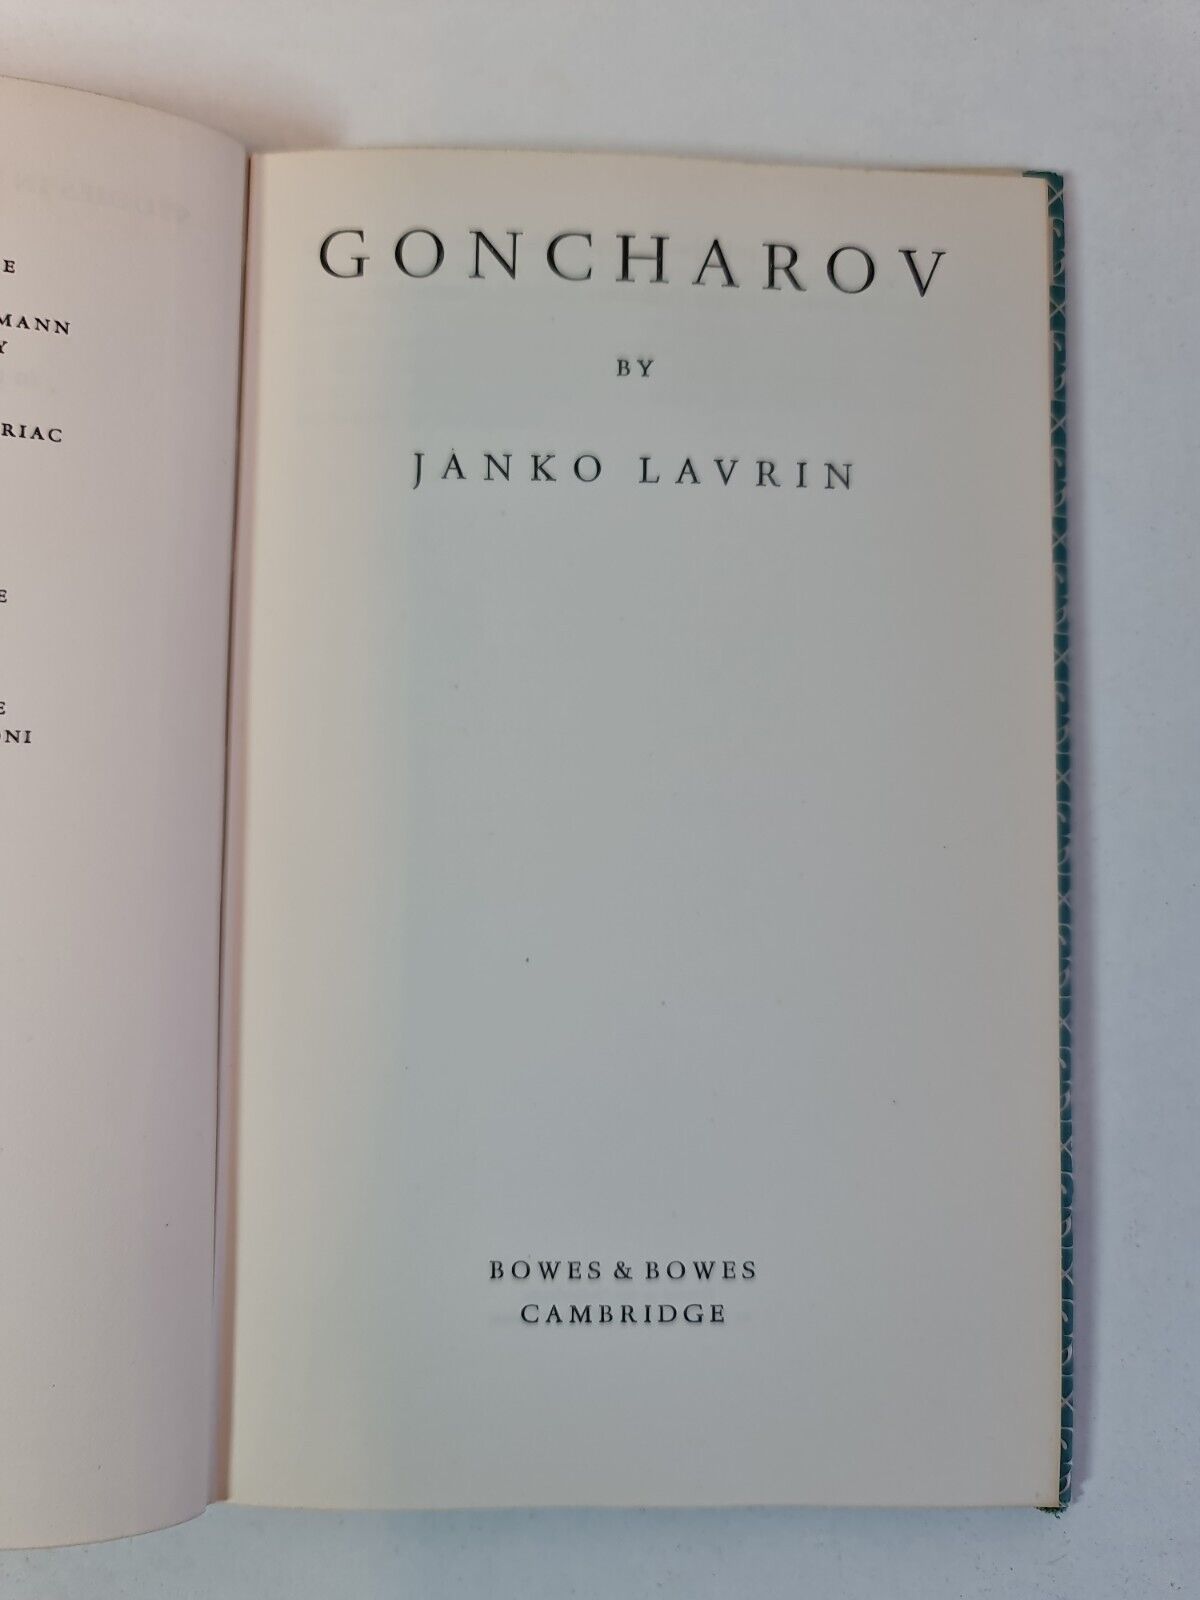 Goncharov by Janko Lavrin (1954)